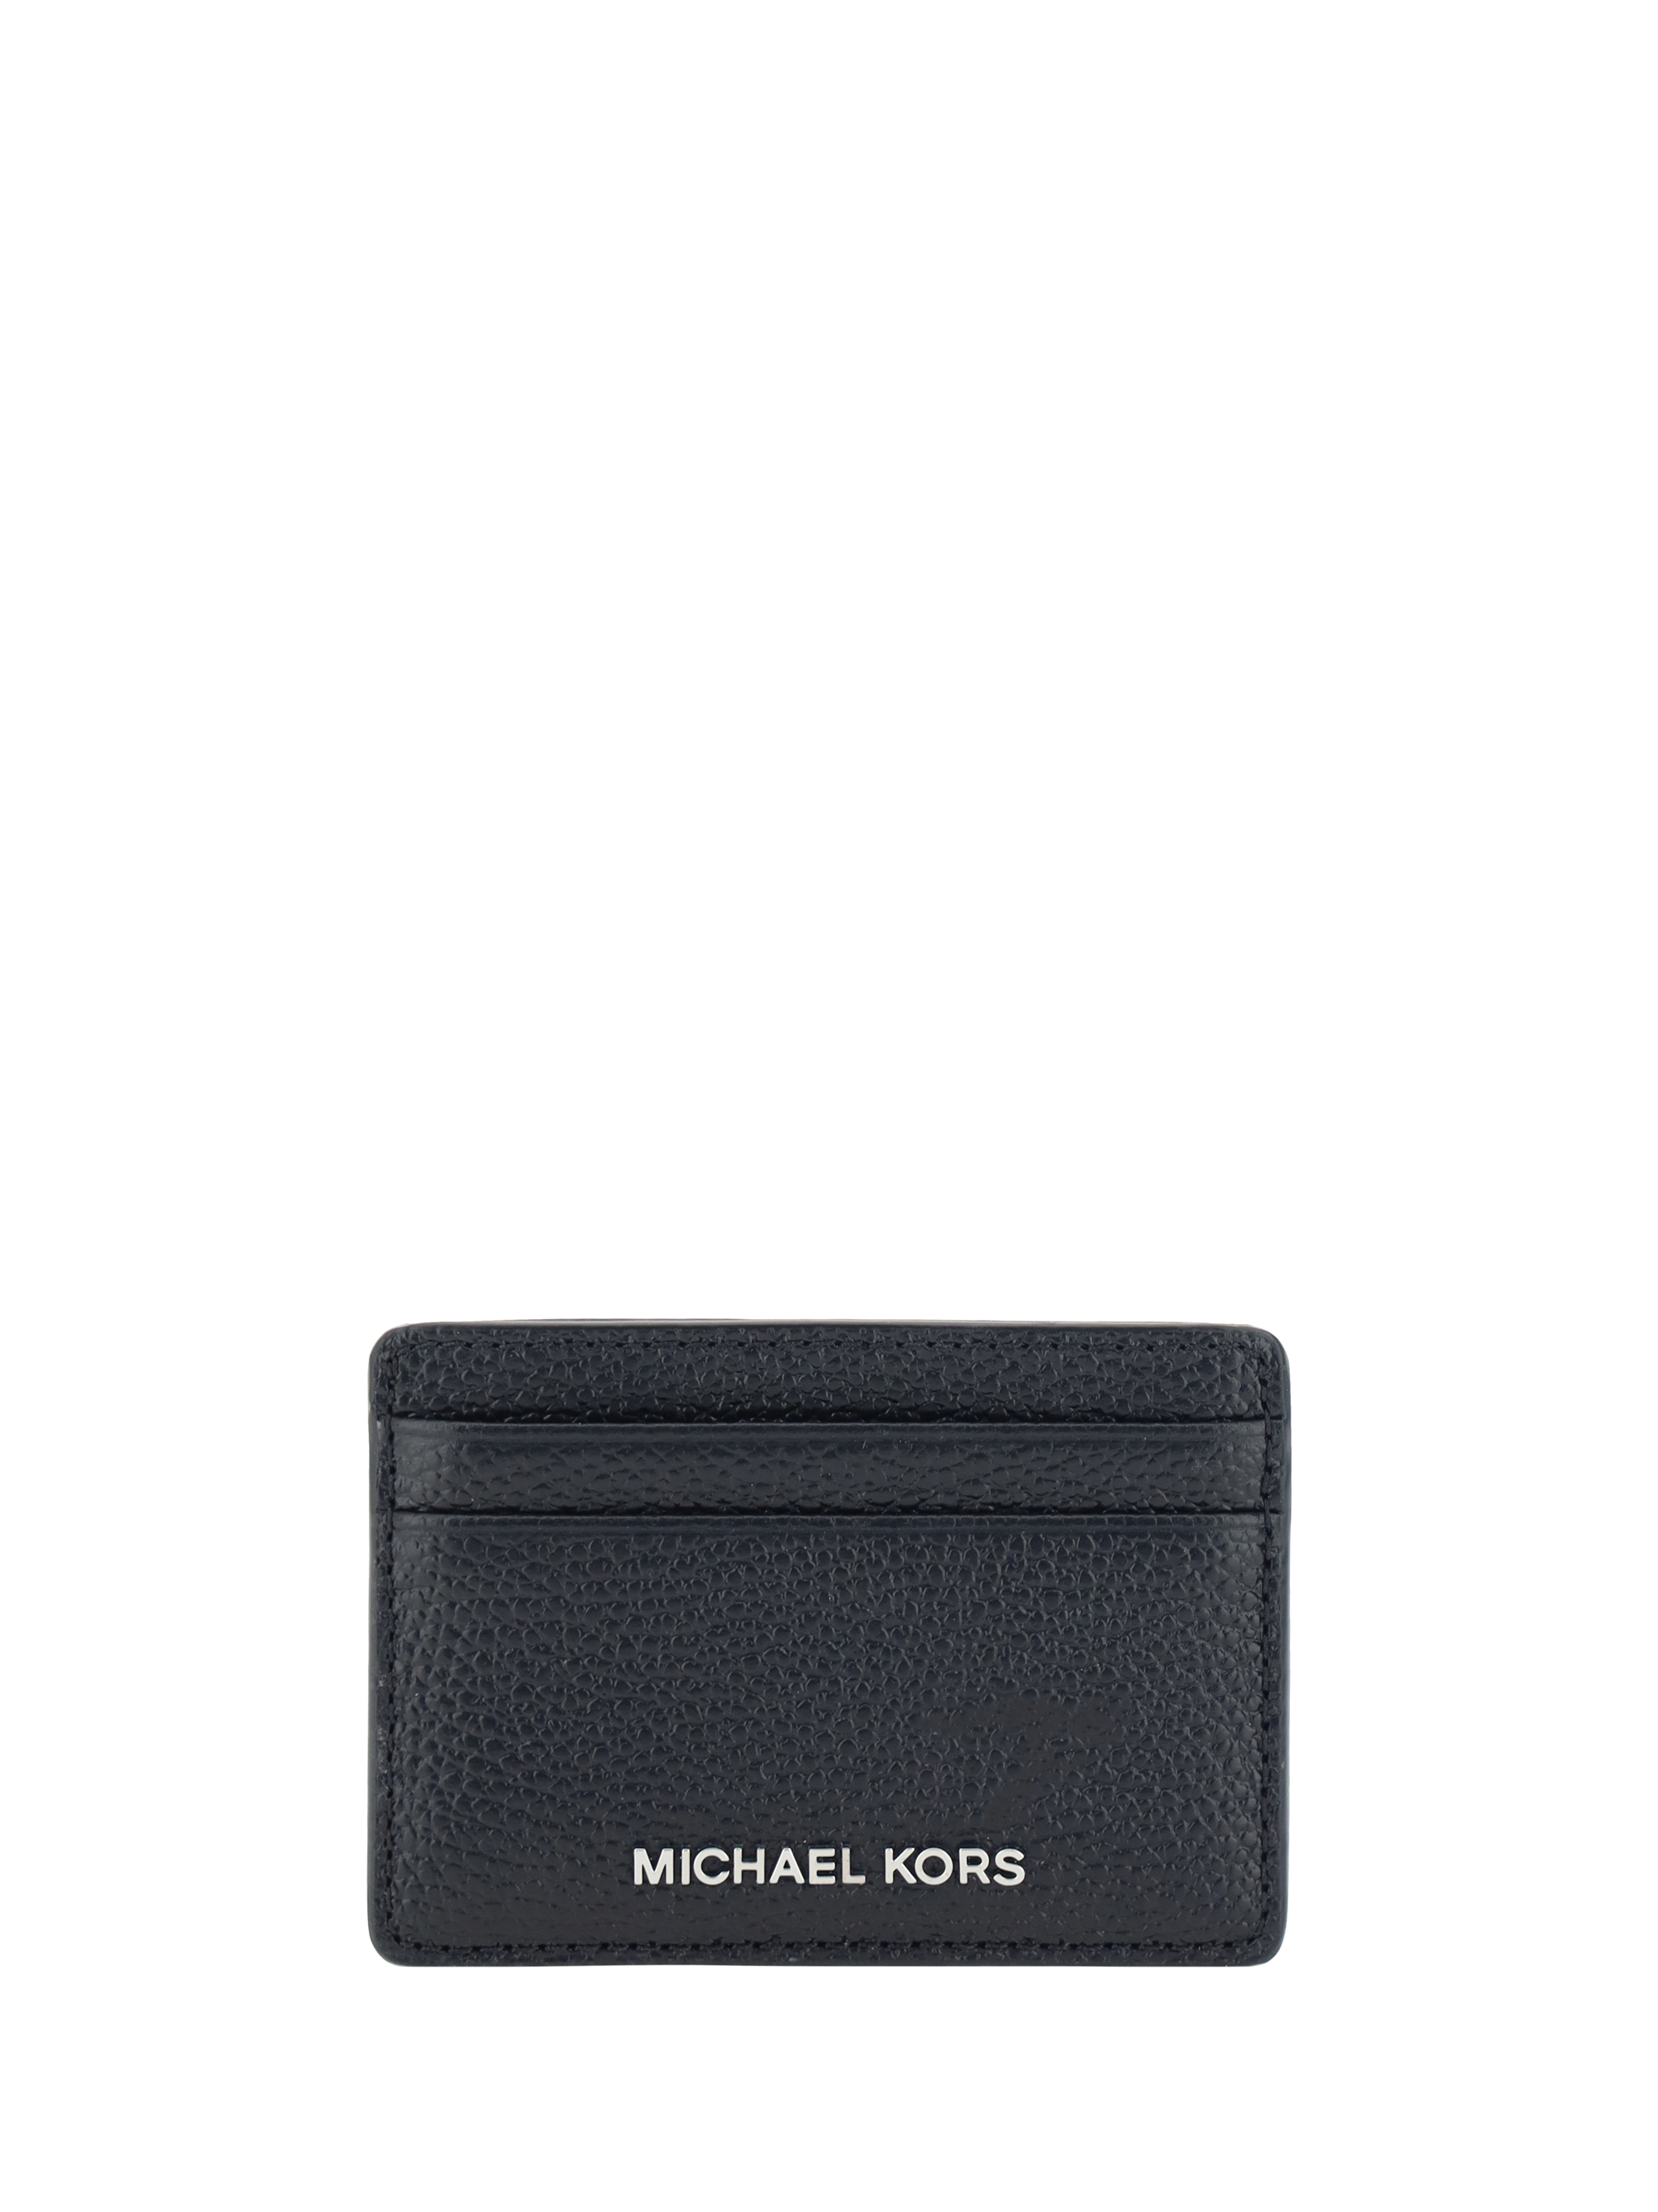 michael kors - jet set card holder